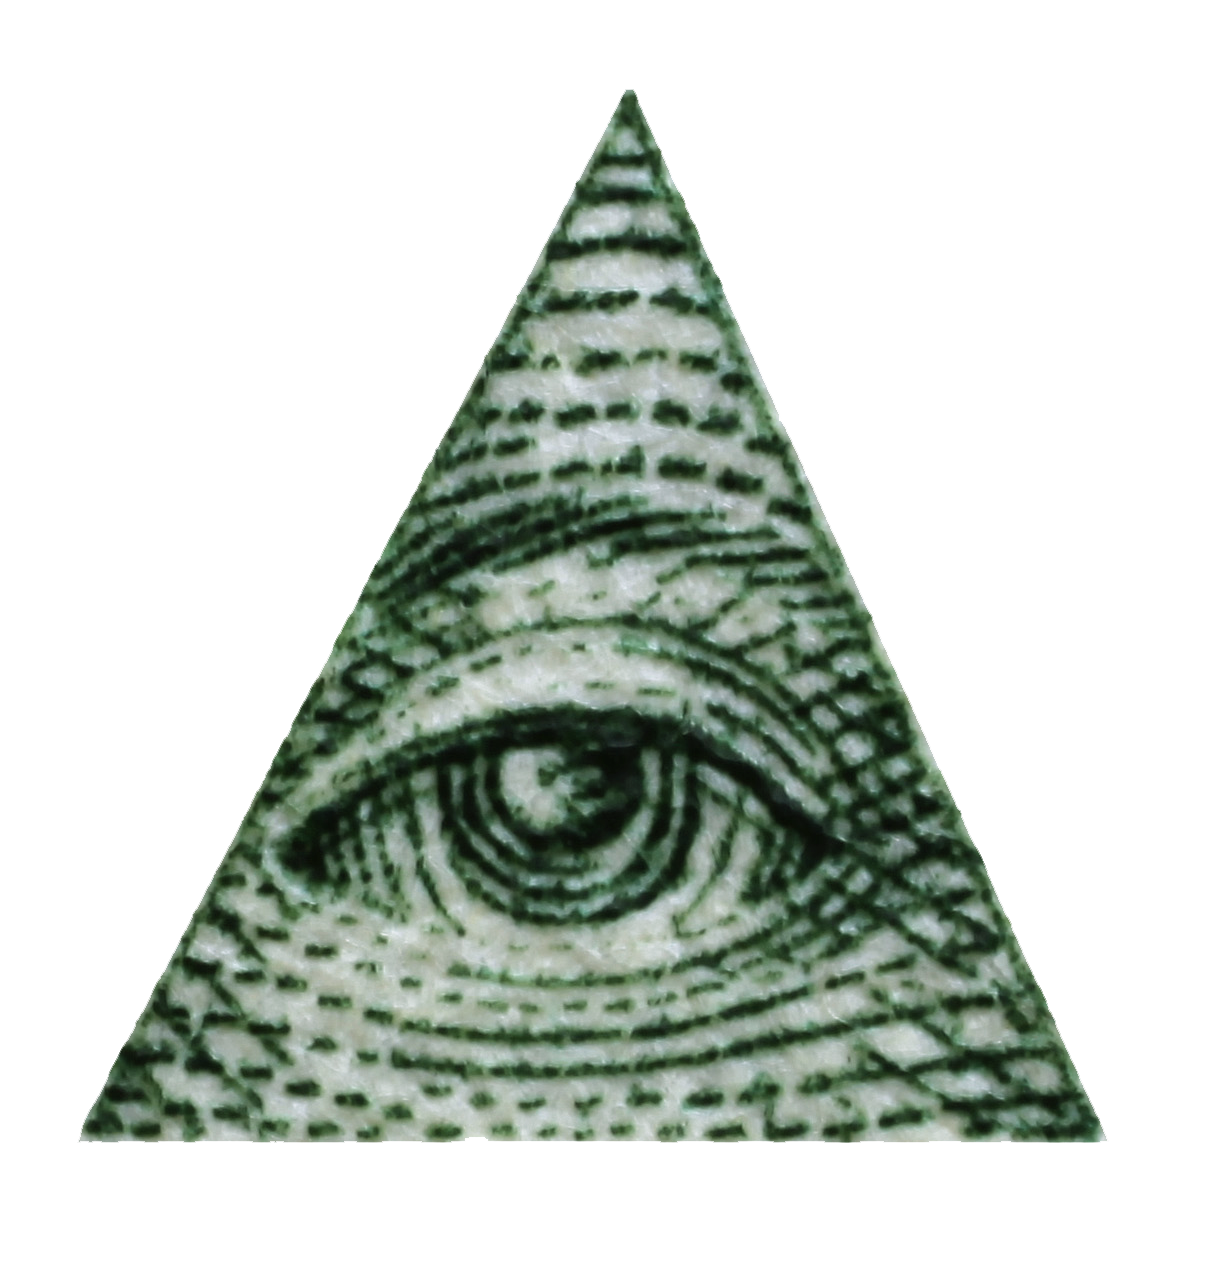 Illuminati_triangle_eye.png